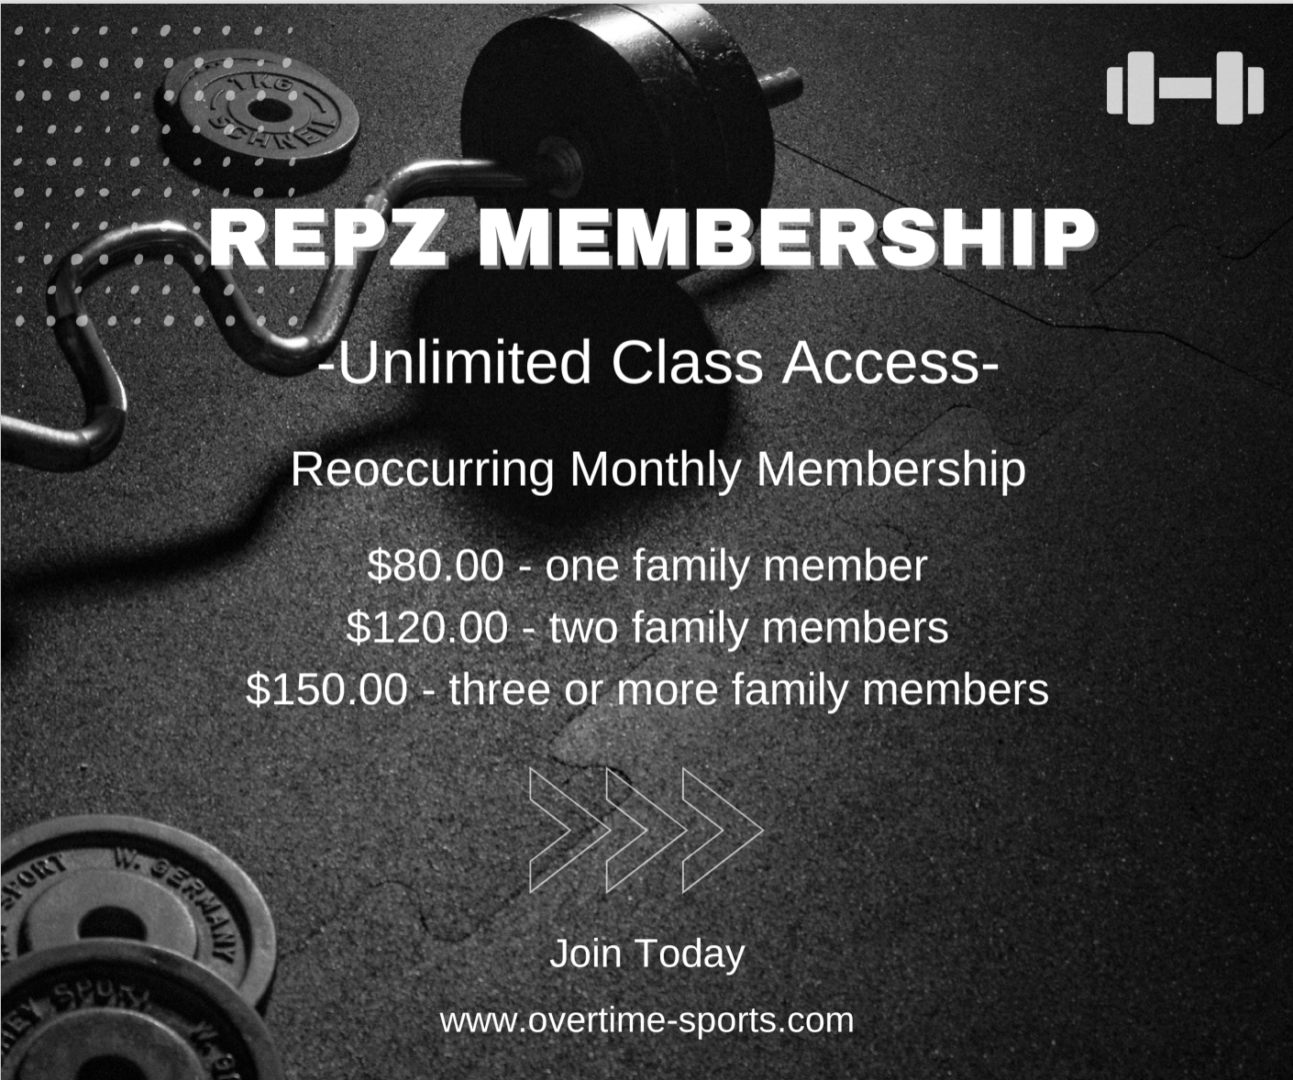 Repz membership